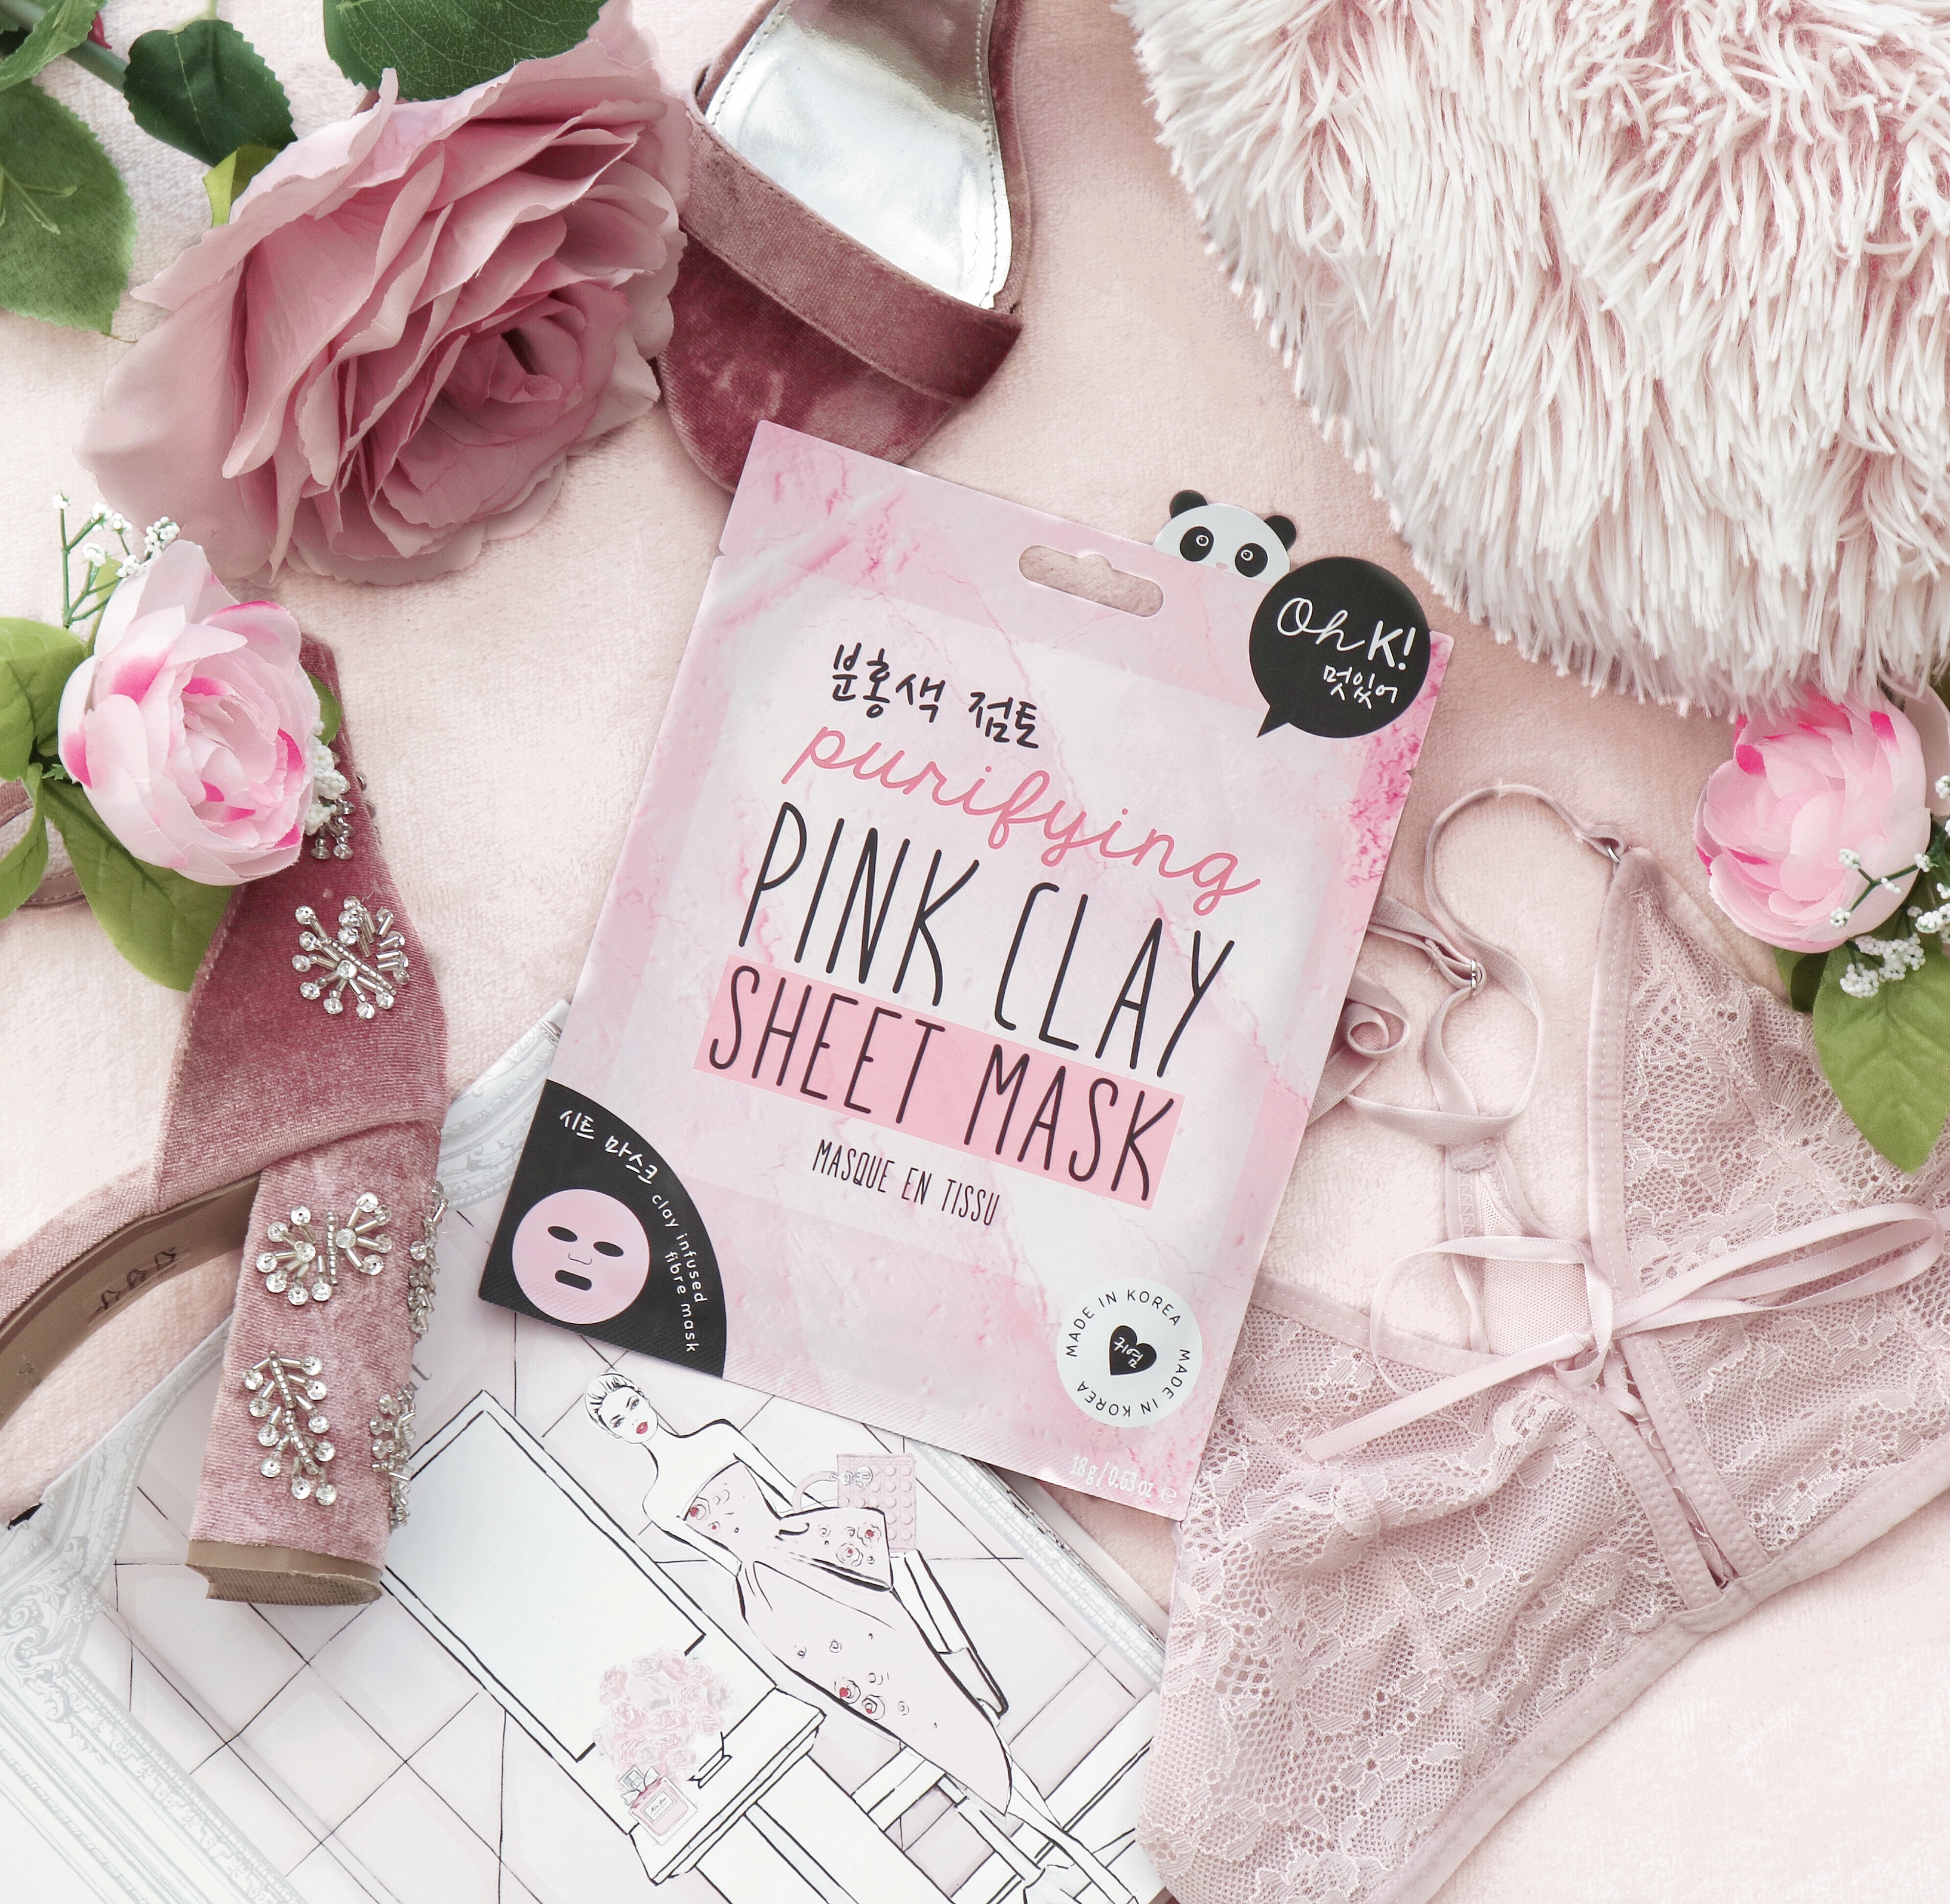 Oh K! Pink Clay Sheet Mask